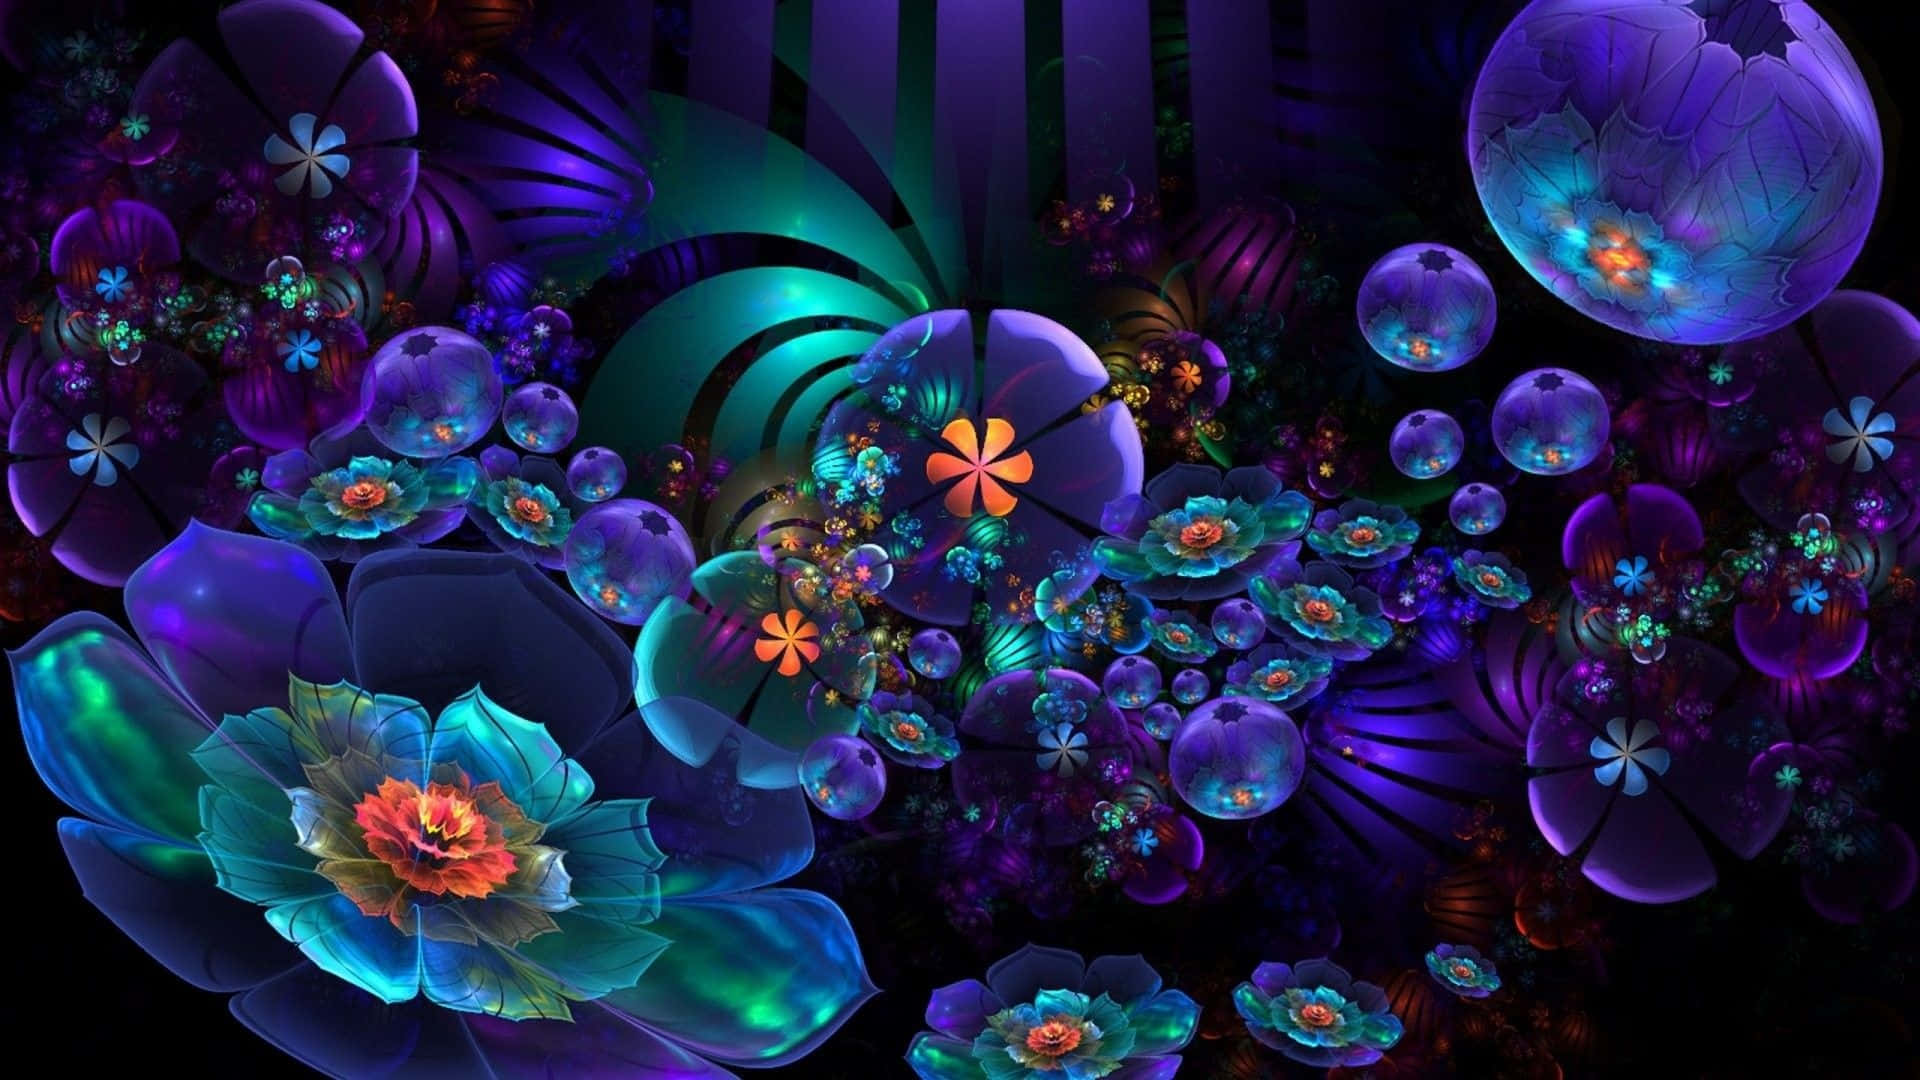 Vibrant Neon Floral Fantasy Wallpaper